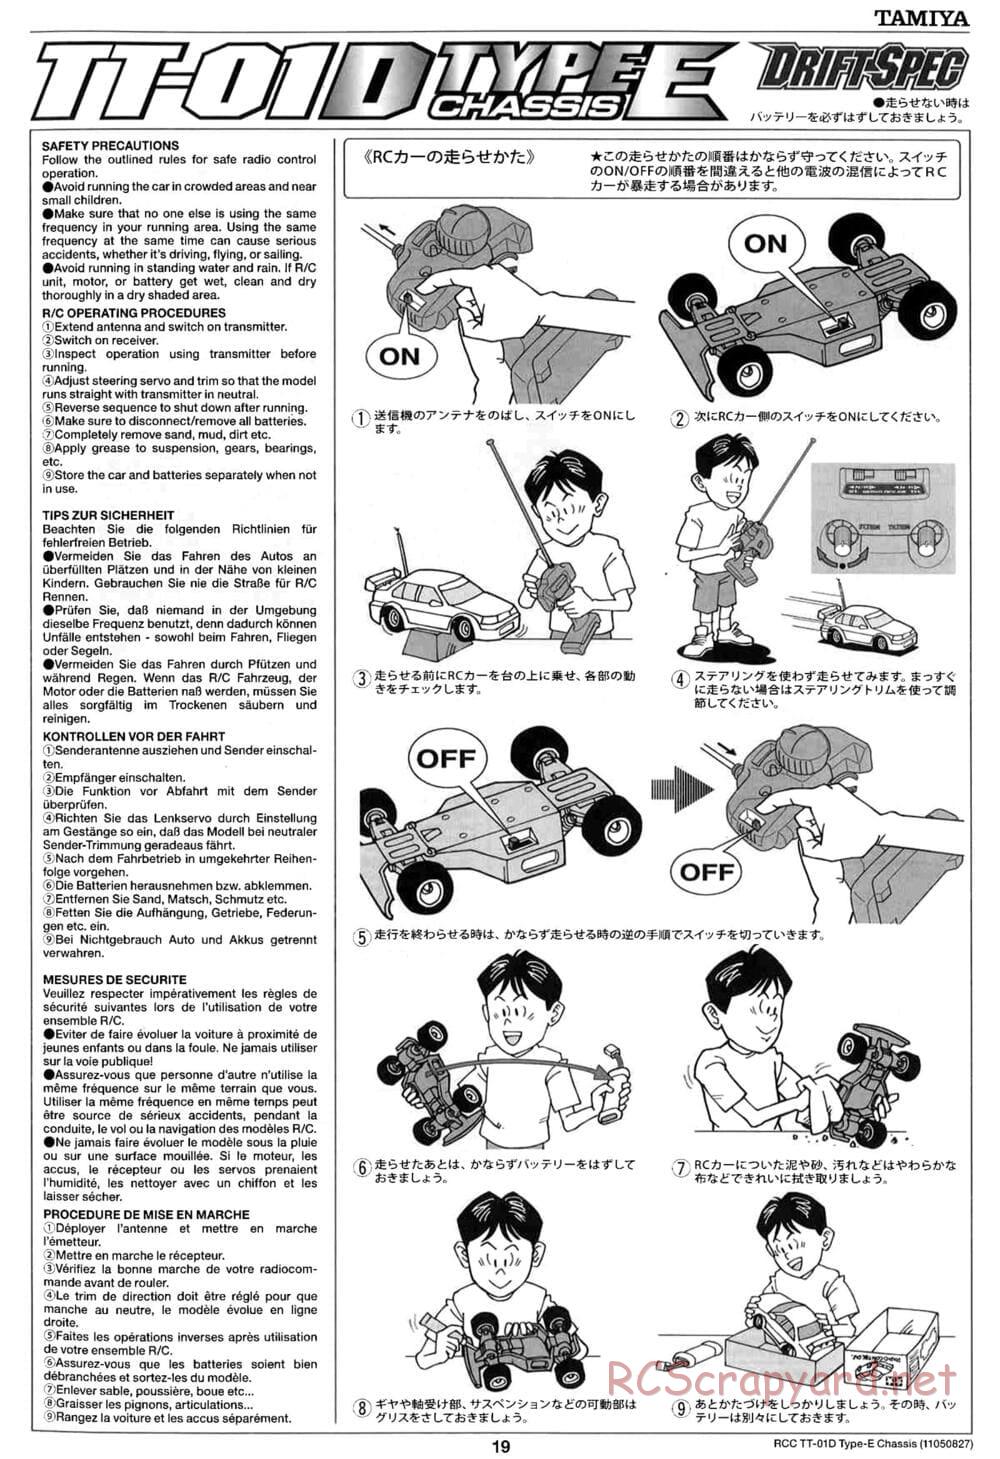 Tamiya - TT-01D Type-E (TT-01ED) - Drift Spec Chassis - Manual - Page 19